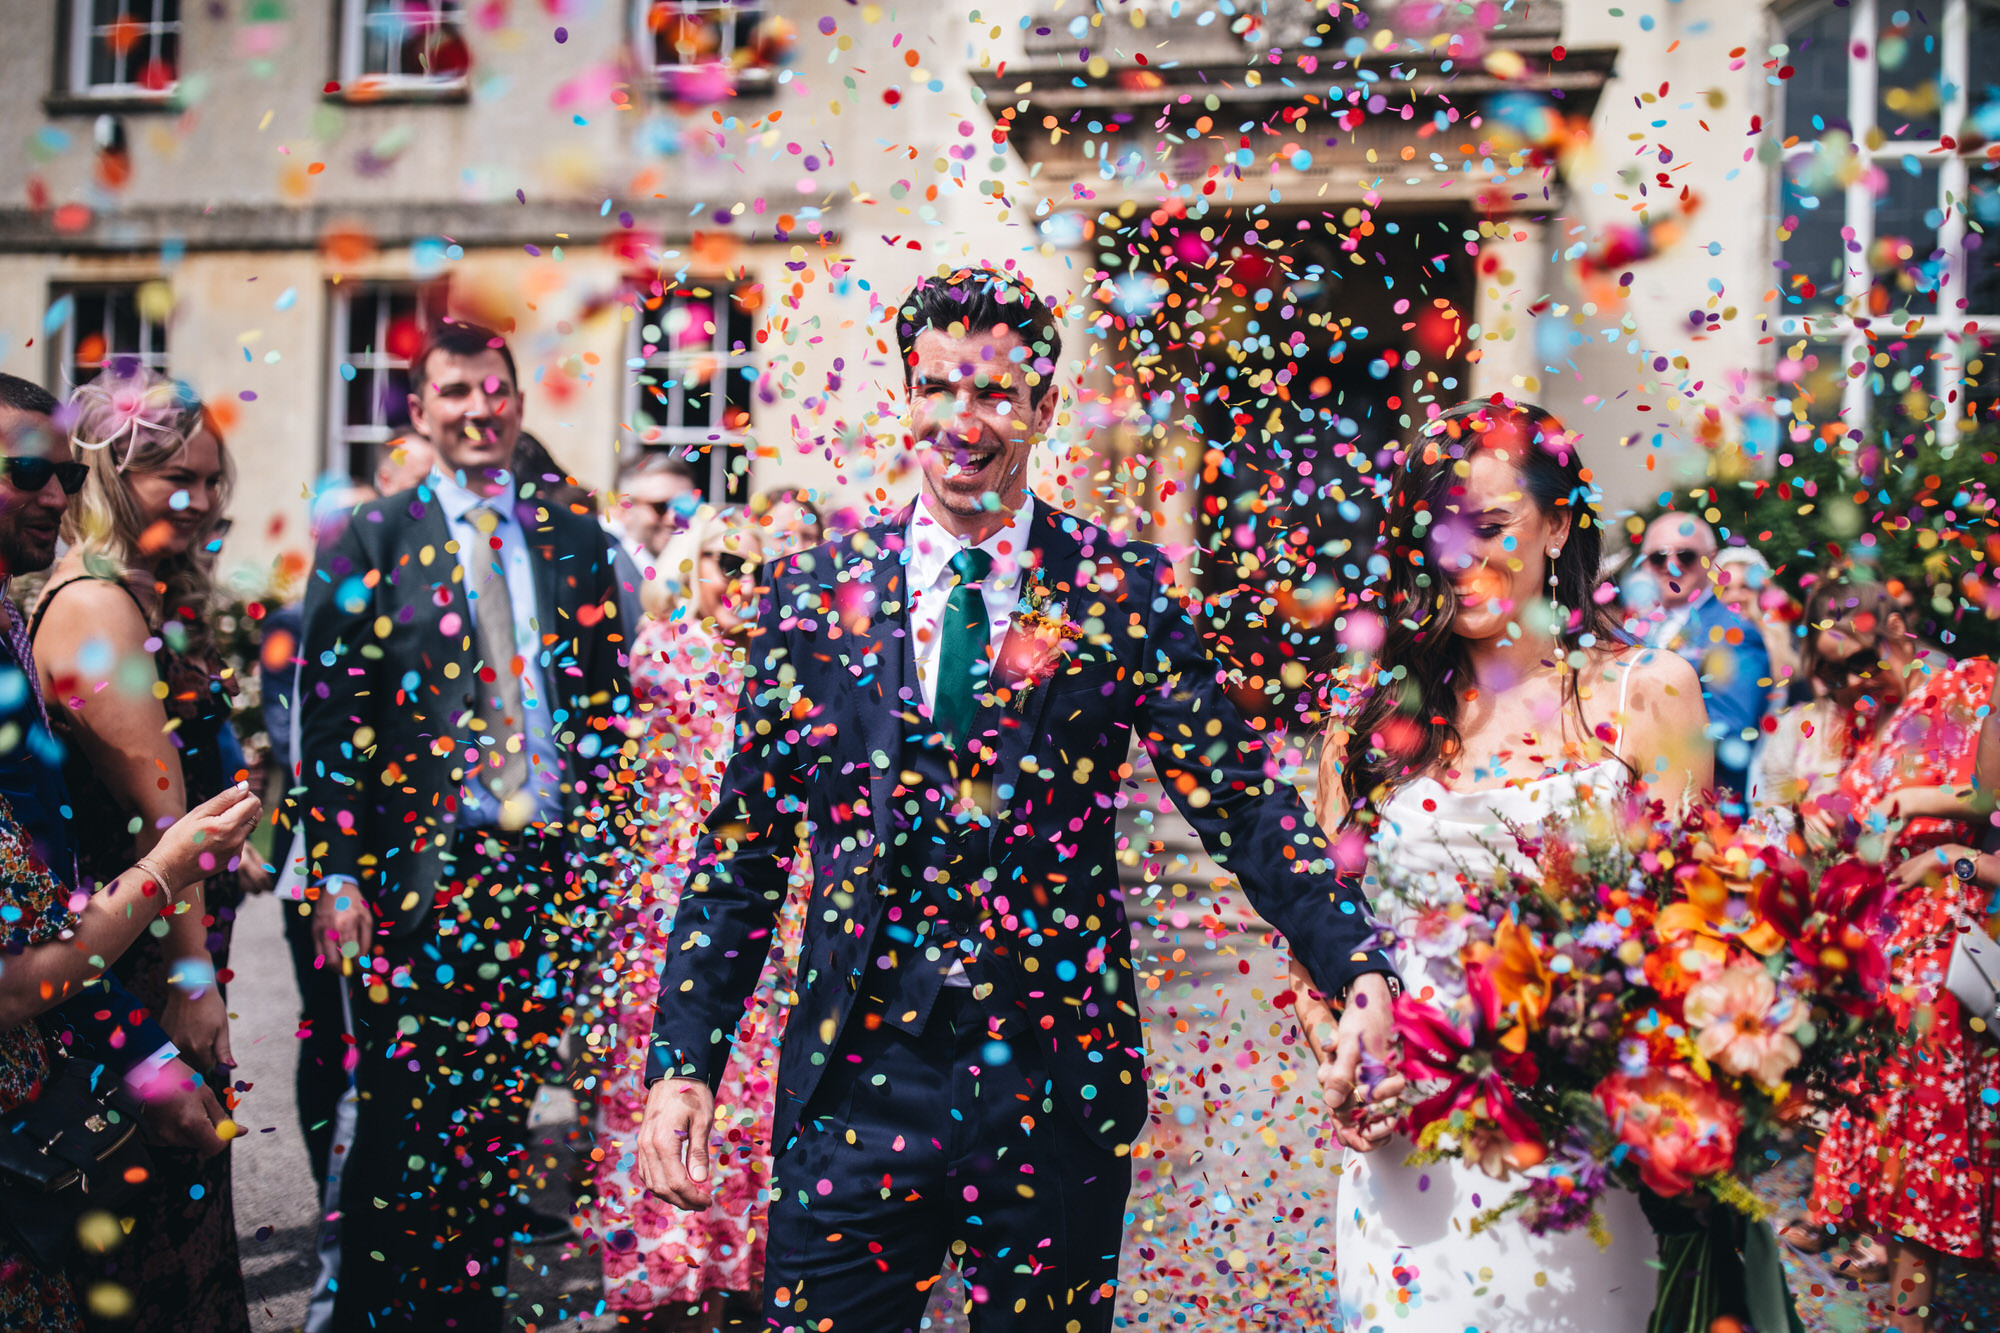 Mike Plunkett Manchester Wedding Photographer confetti colourful